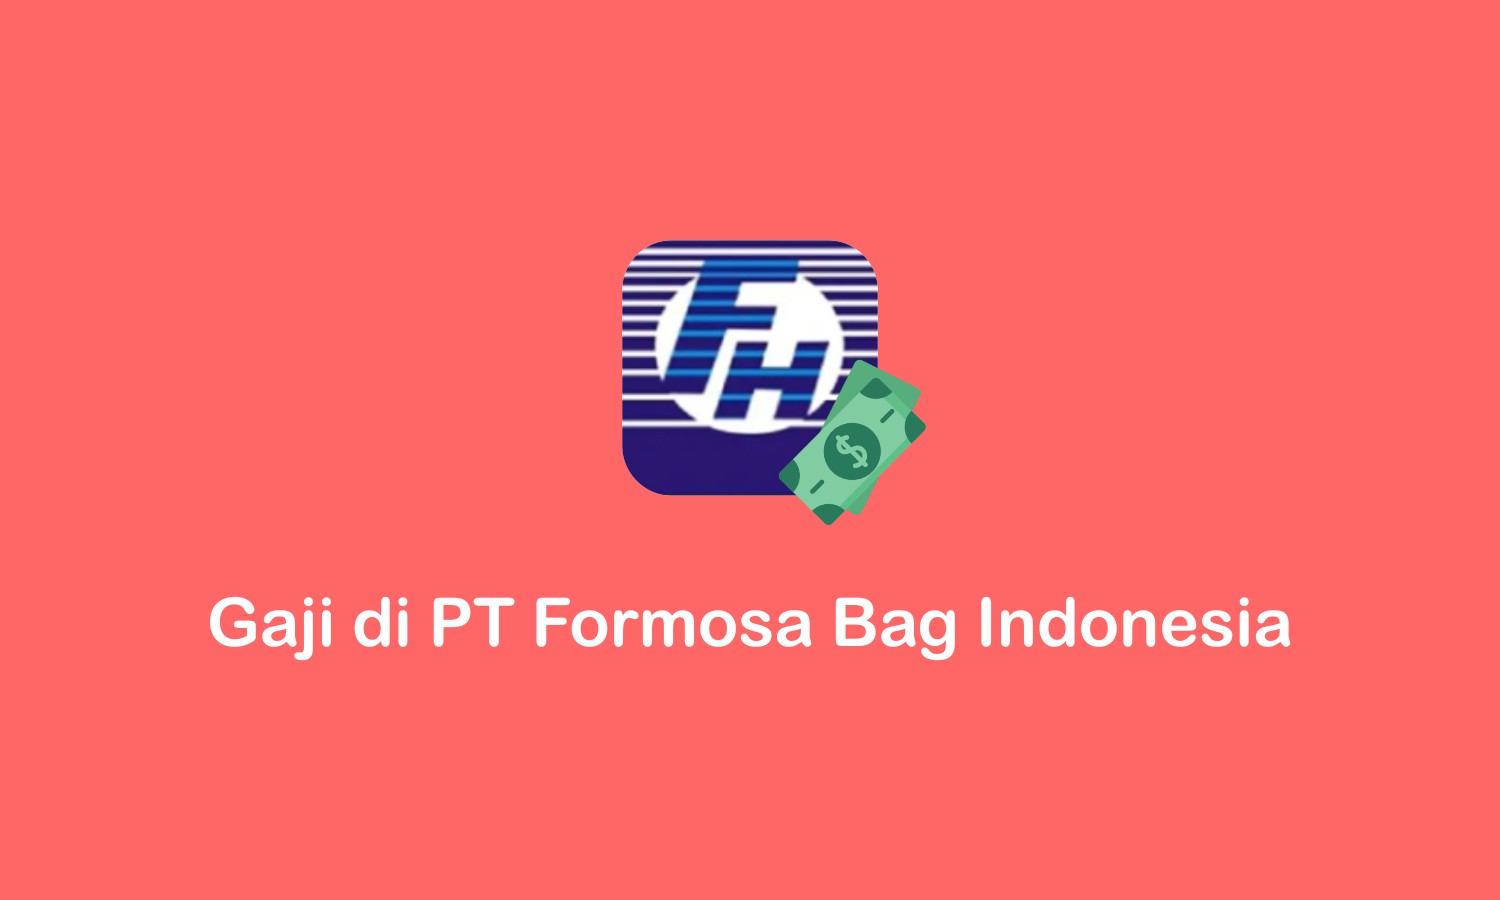 Gaji di PT Formosa Bag Indonesia 2022